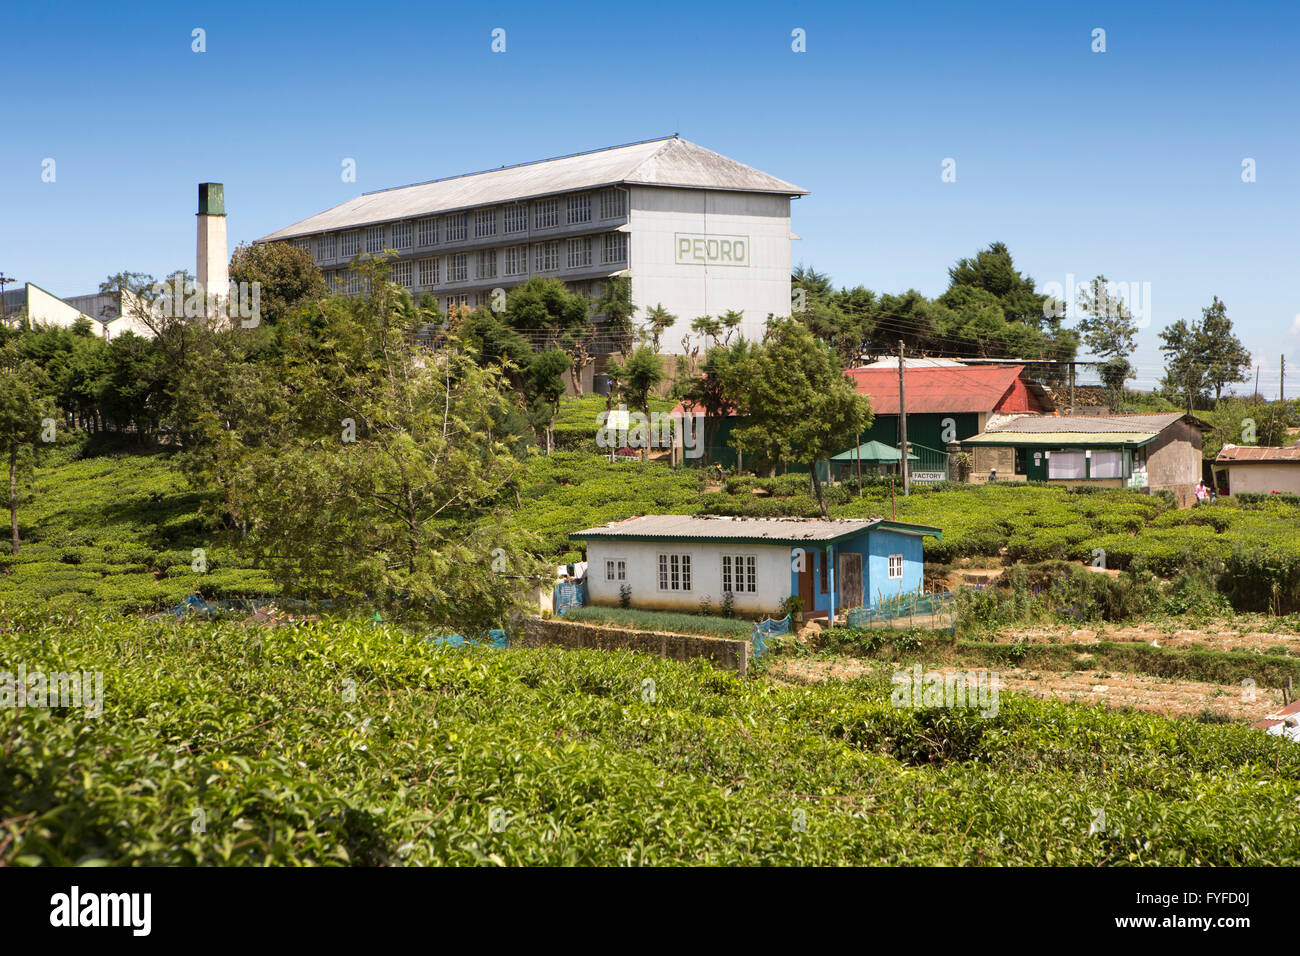 Sri Lanka, Nuwara Eliya, Pedro Tea Estate and factory Stock Photo - Alamy